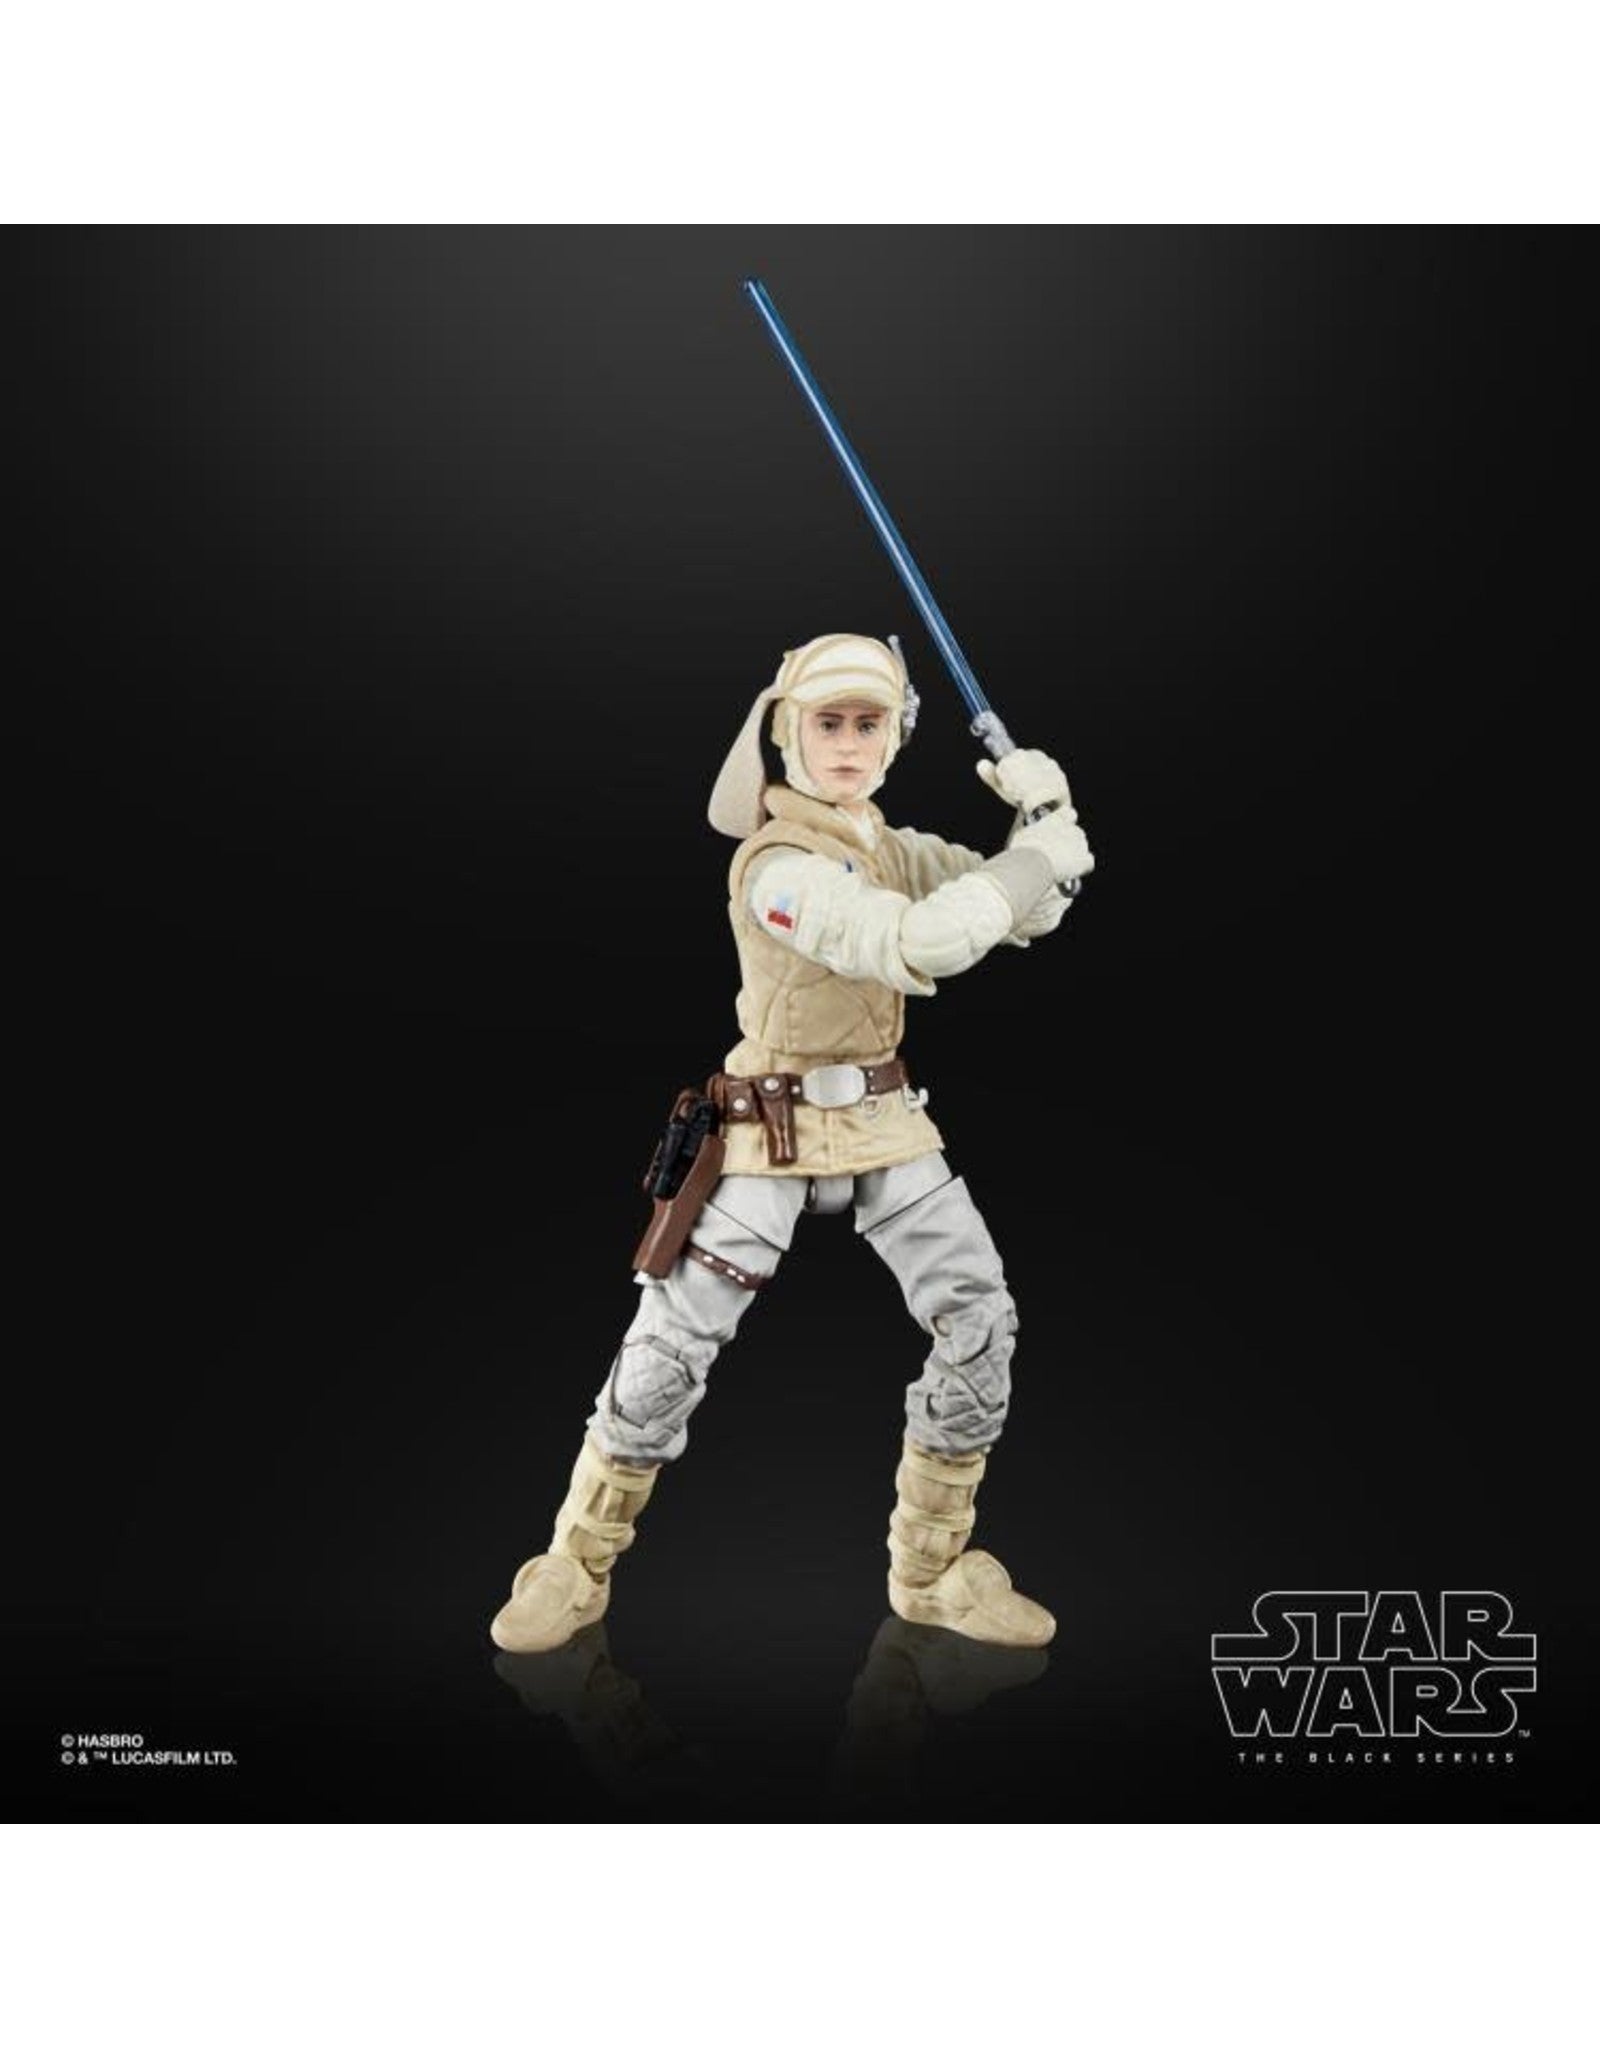 Star Wars The Black Series Archive Action Figure Wave 1: Luke Skywalker (Hoth)